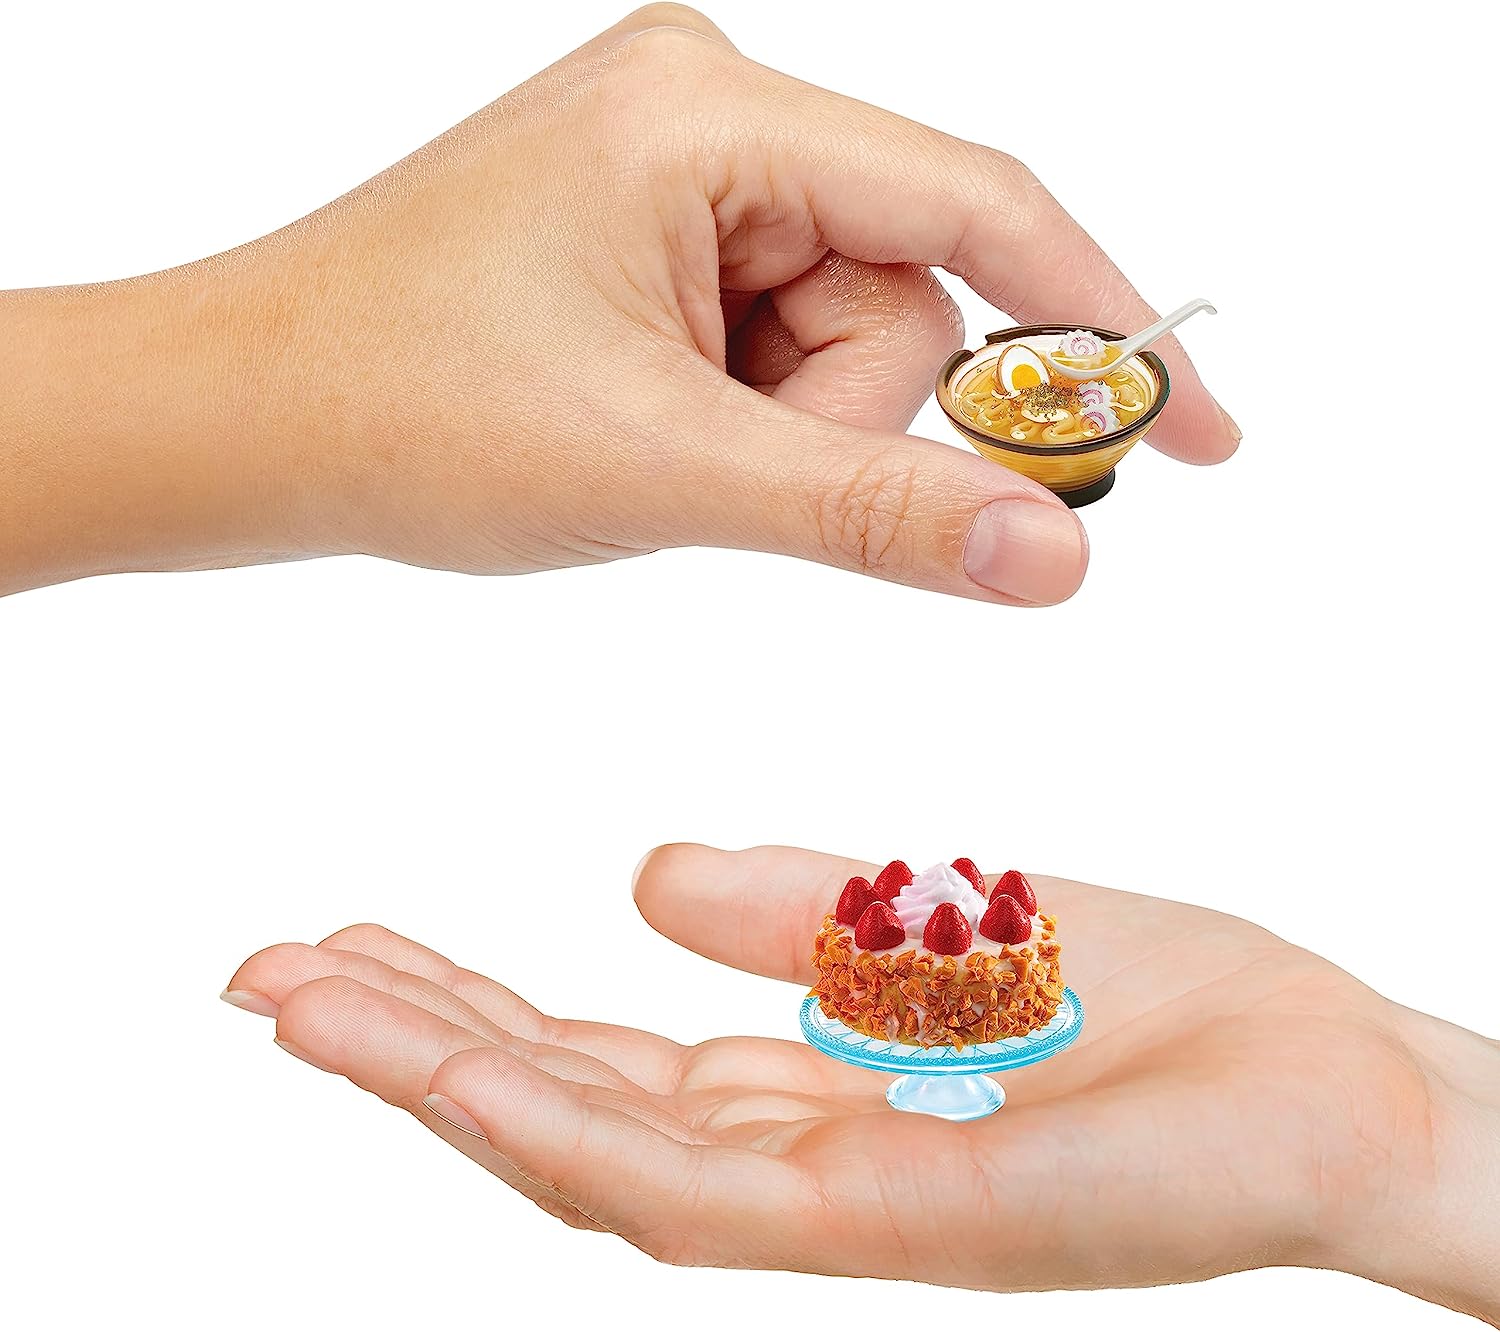 Miniverse Make It Mini Food Collectible, Hobby Lobby